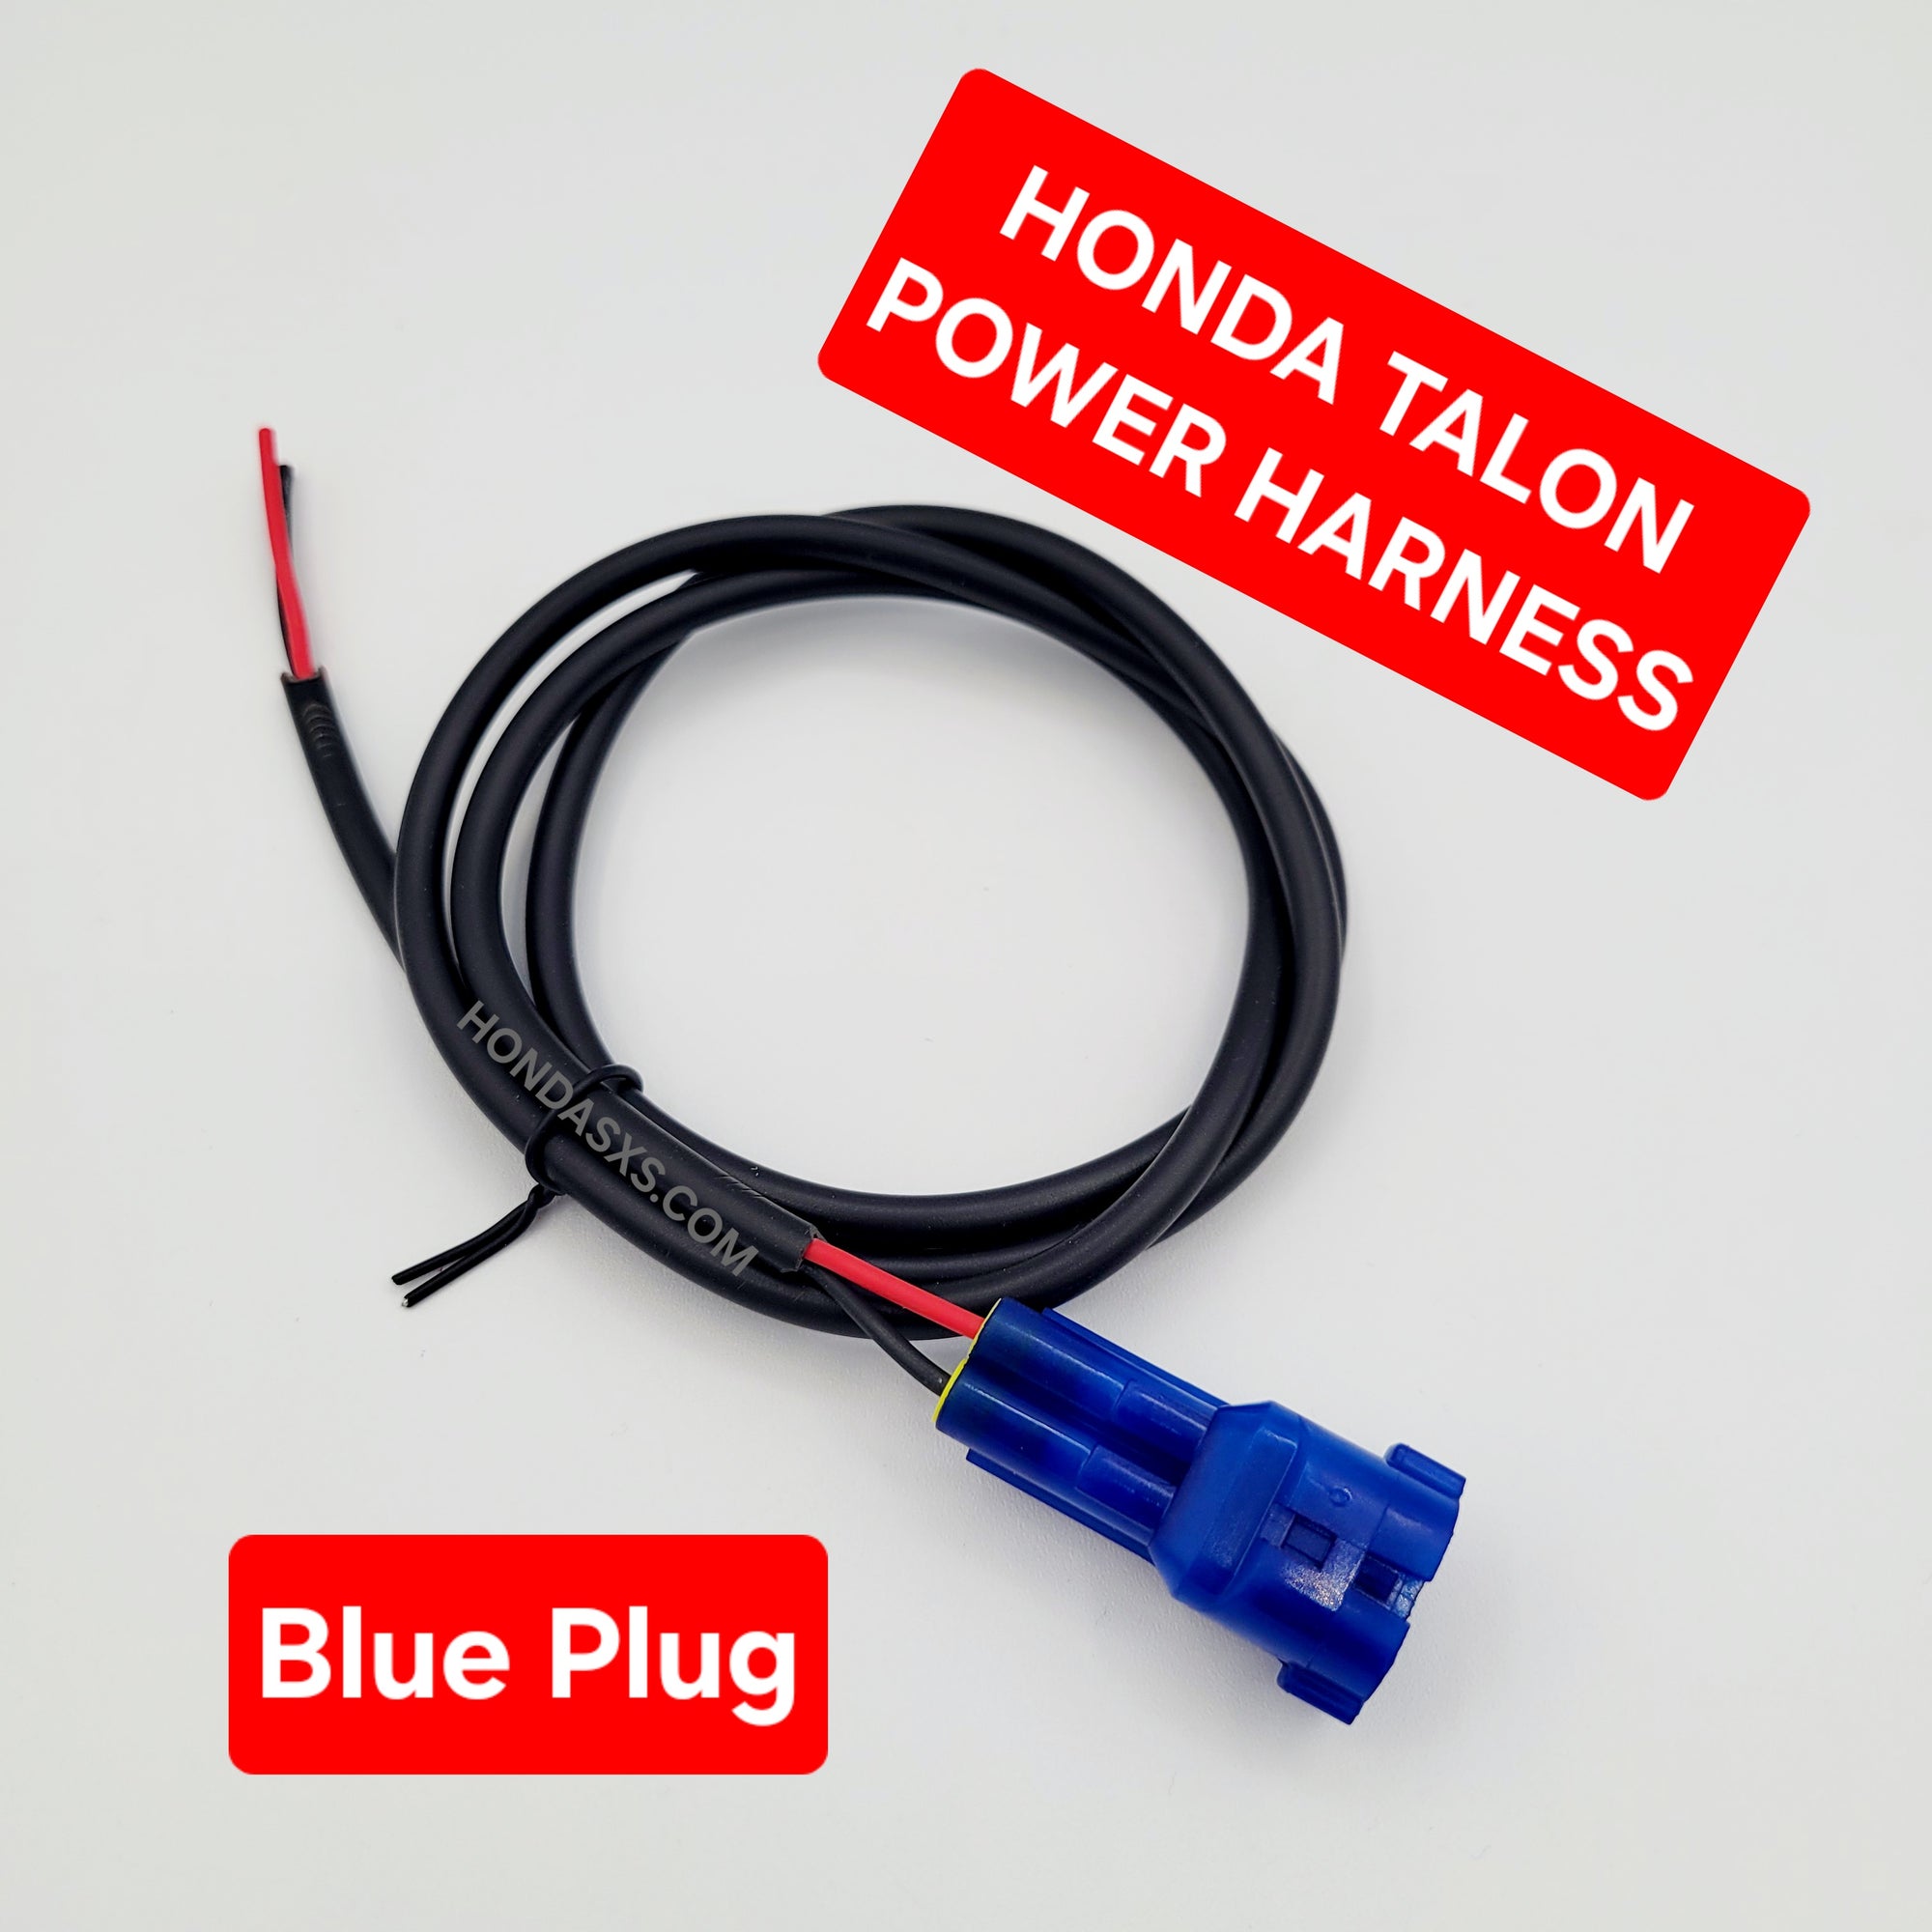 Honda Talon Power Harness - Version B- Blue Plug Fits Horn Socket!